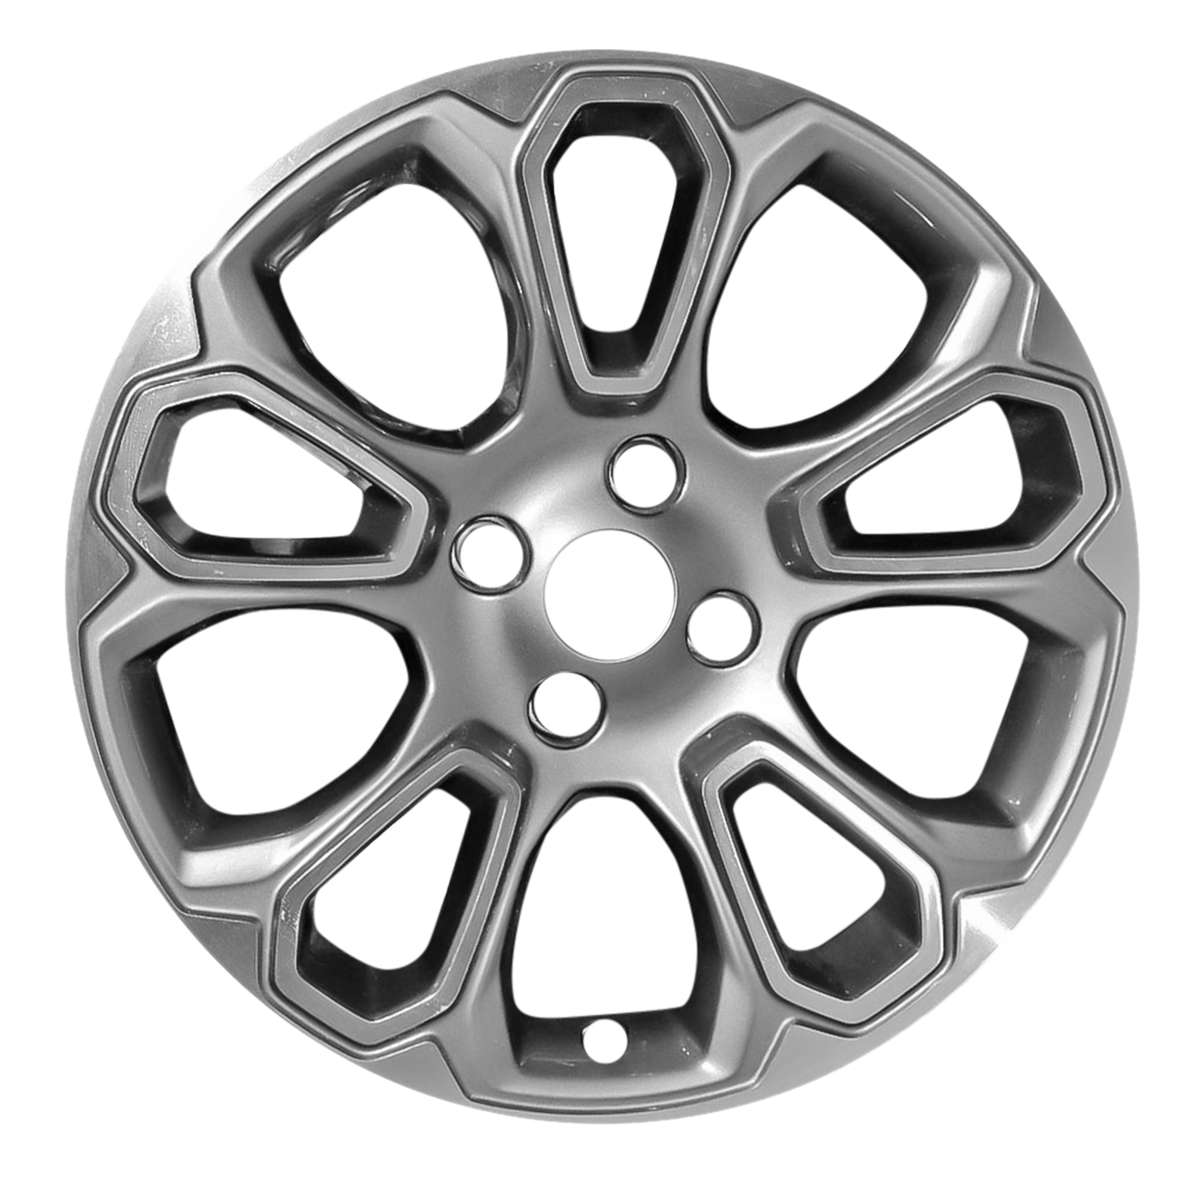 2018 Ford Ecosport 17" OEM Wheel Rim W10152S